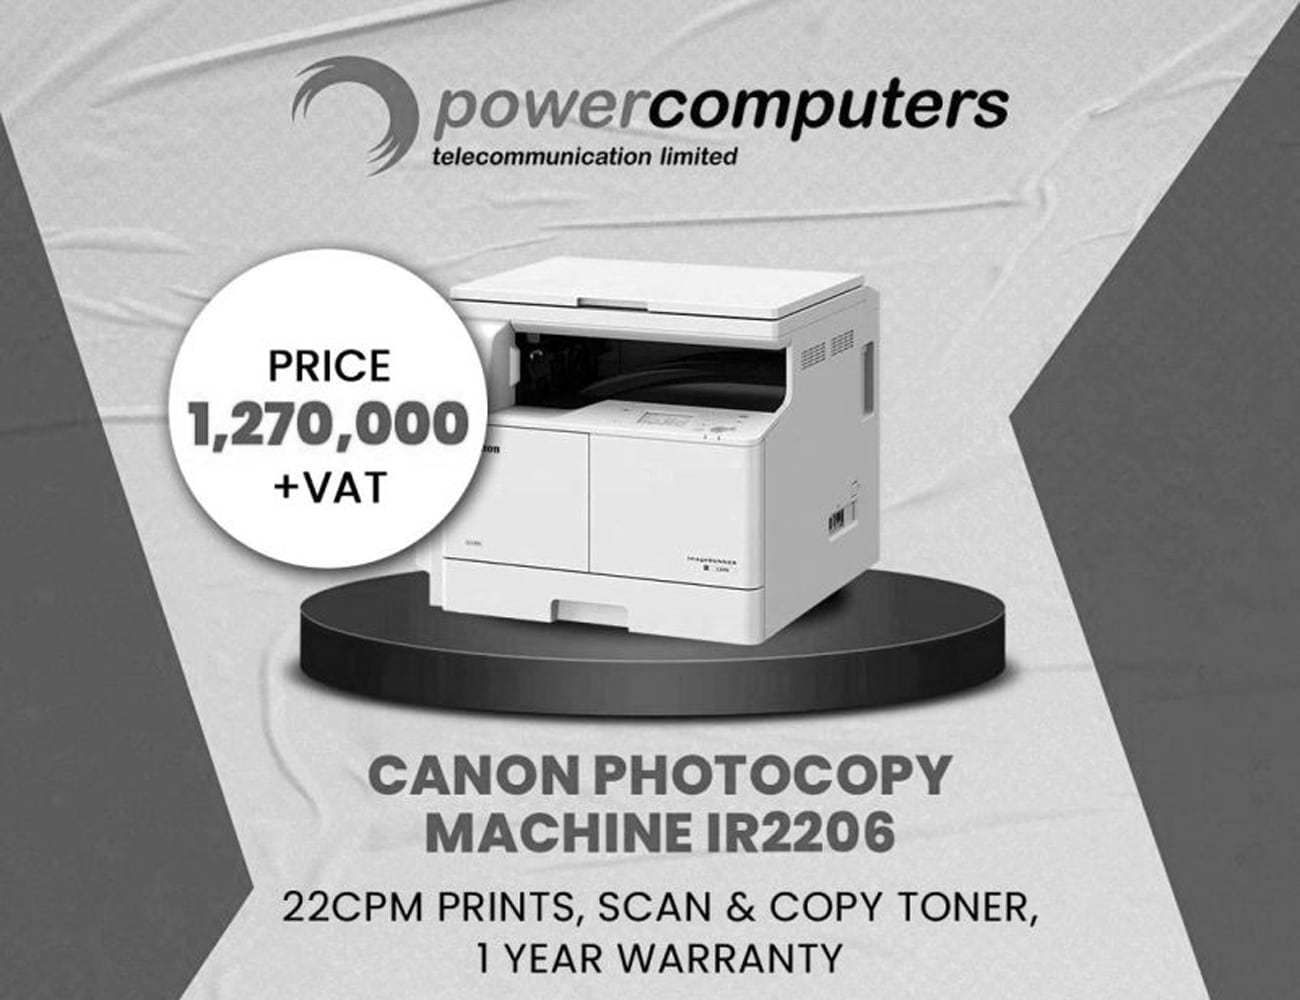 Power Computers Photocopy Machine Price